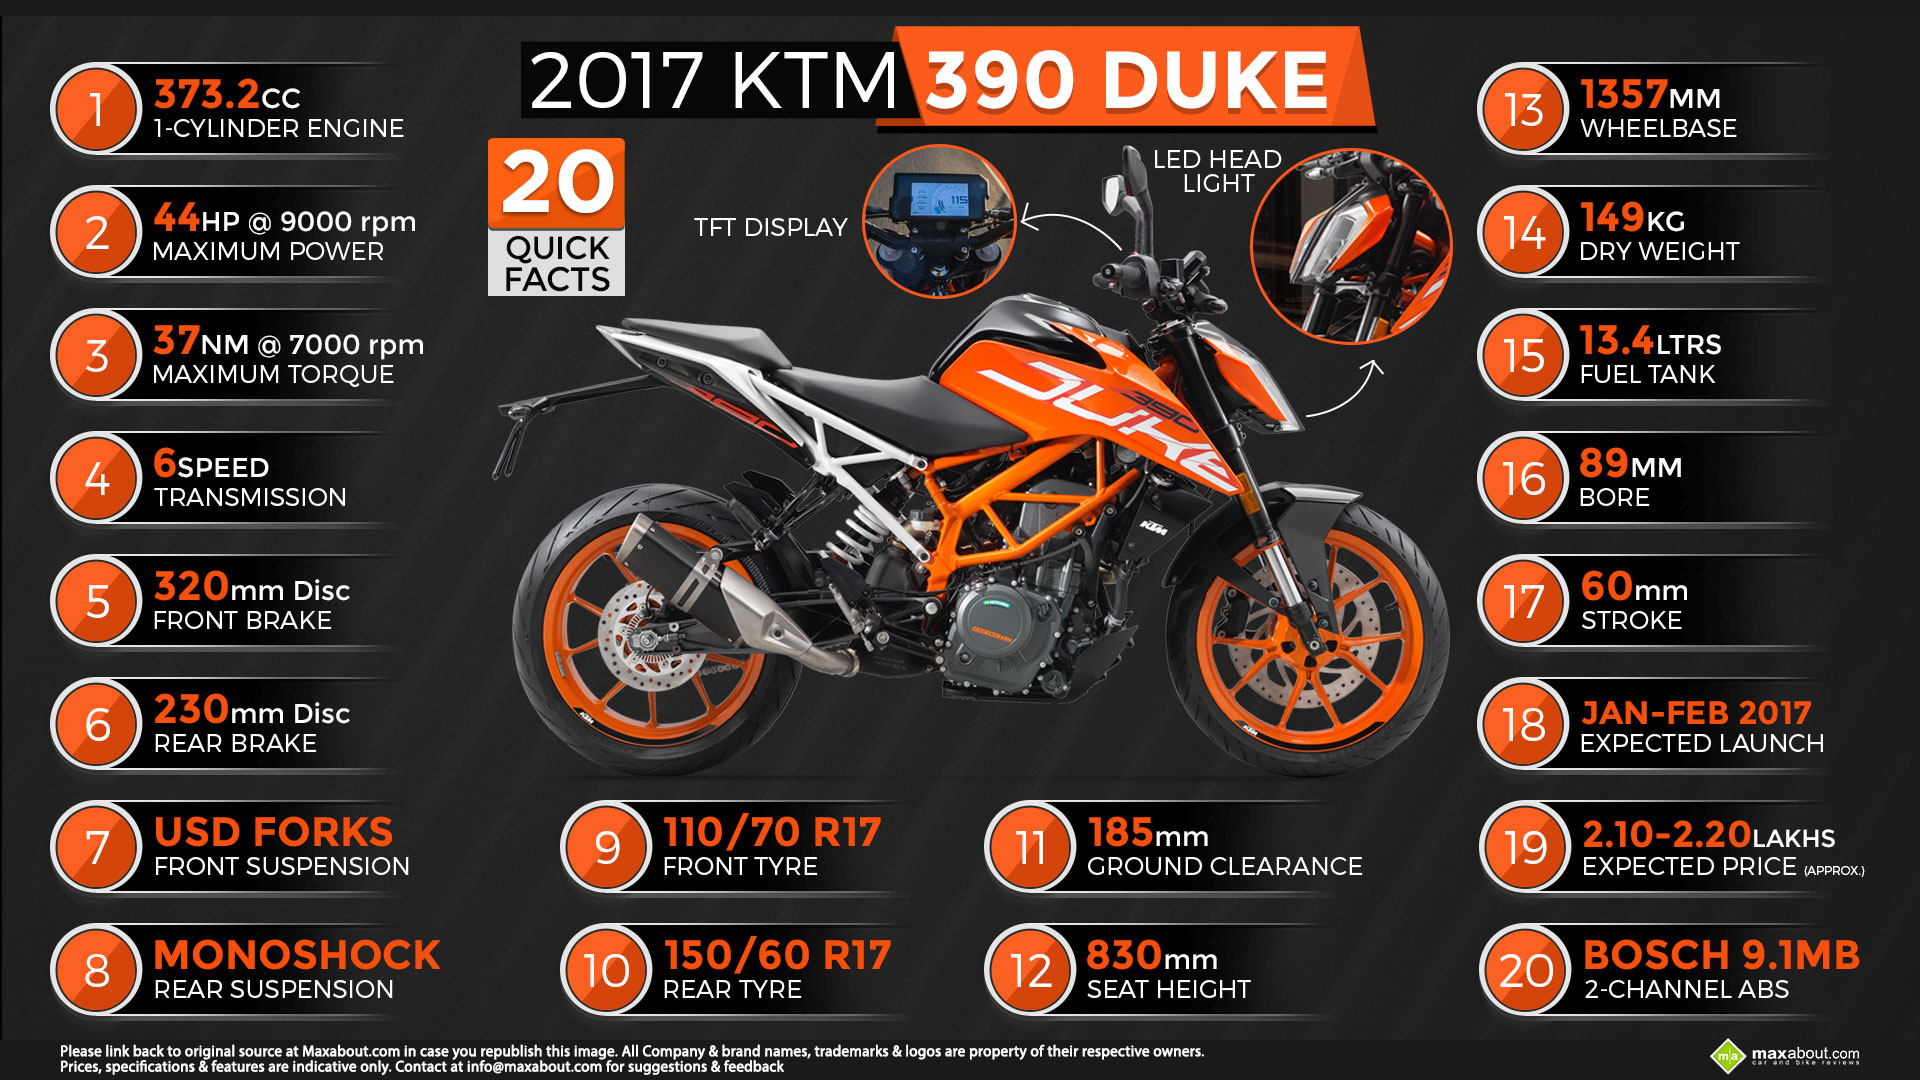 20 Quick Facts About 2017 Ktm Duke 390